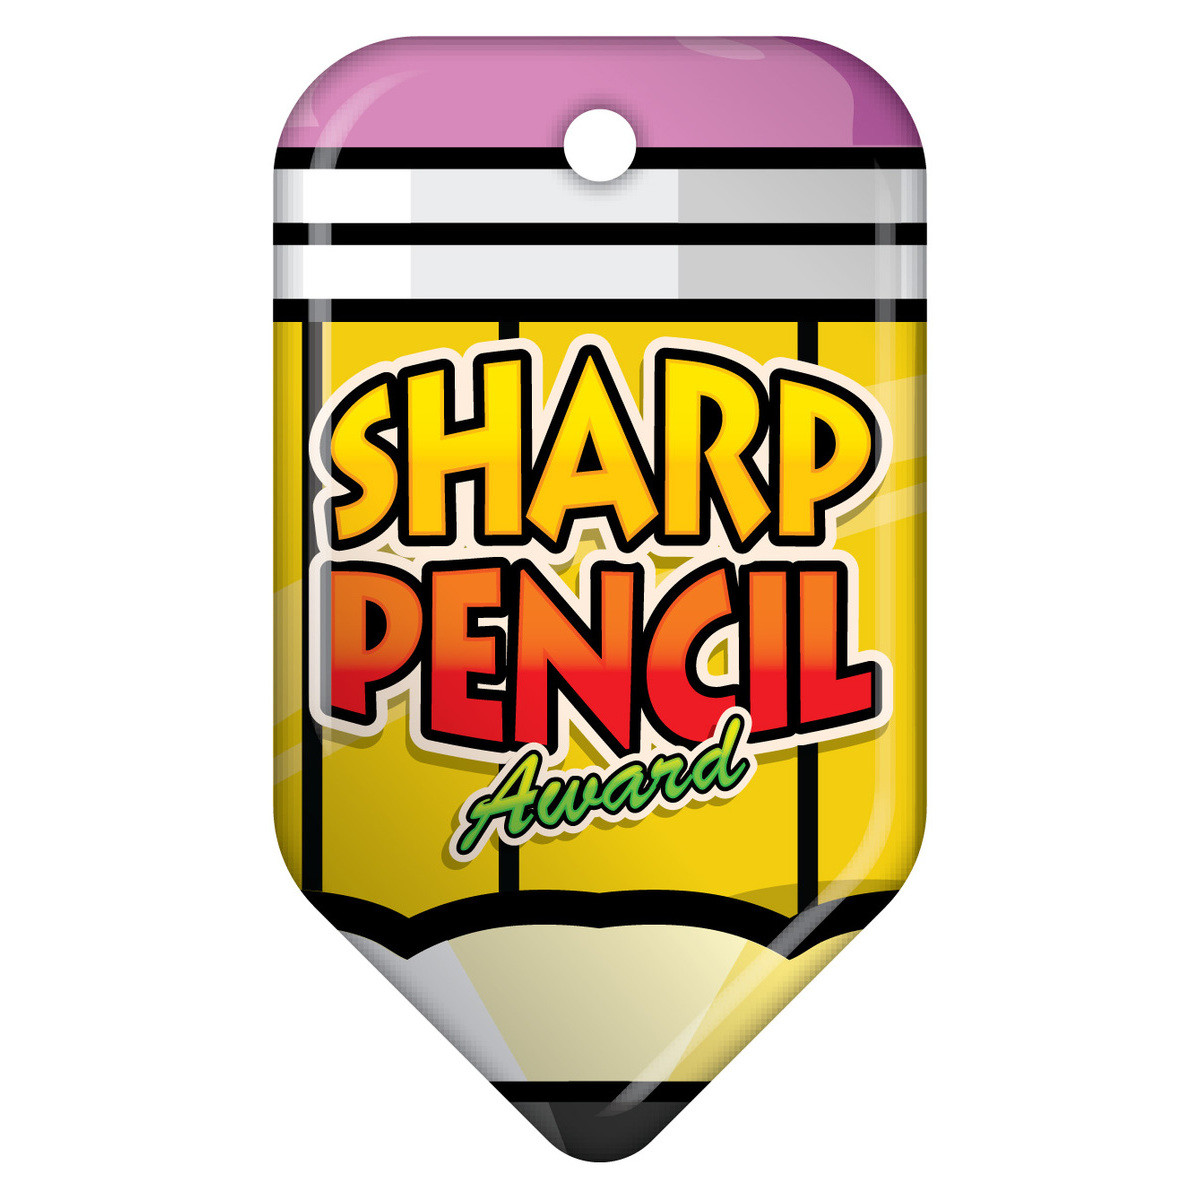 Pencil Brag Tags - Sharp Pencil Award, Yellow